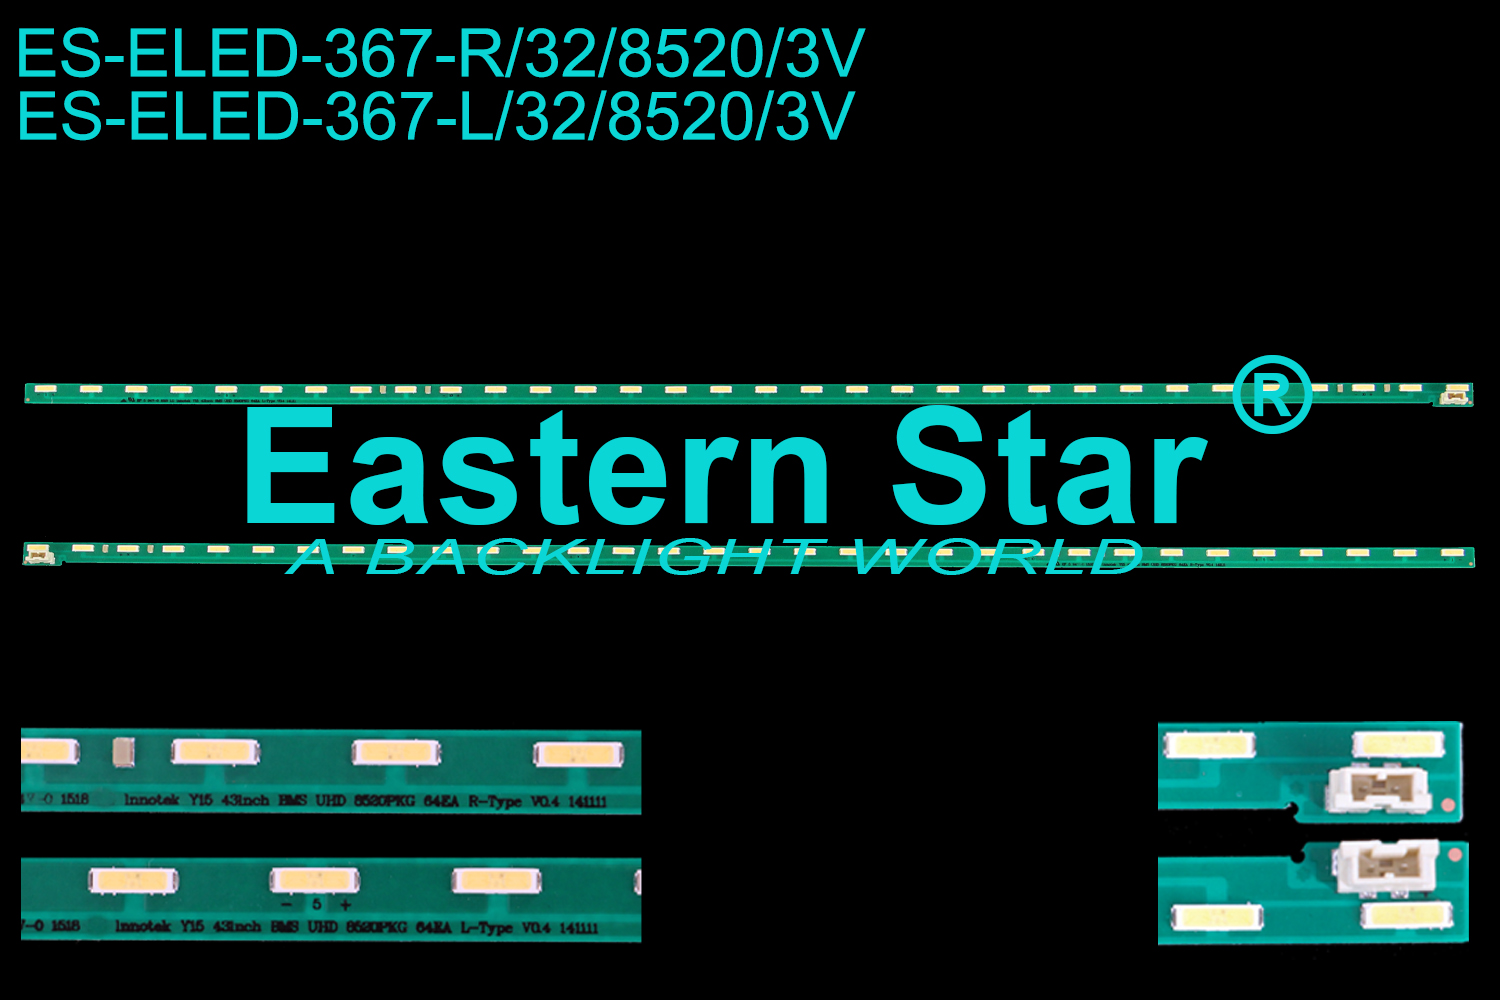 ES-ELED-367 ELED/EDGE TV backlight use for 43'' Lg 43UF690V, 43lf5900 LG Lnnotek Y15 43INCH BMS UHD 8520PKG 64EA L/R-TYPE  V0.4  14111 LED STRIPS(2)